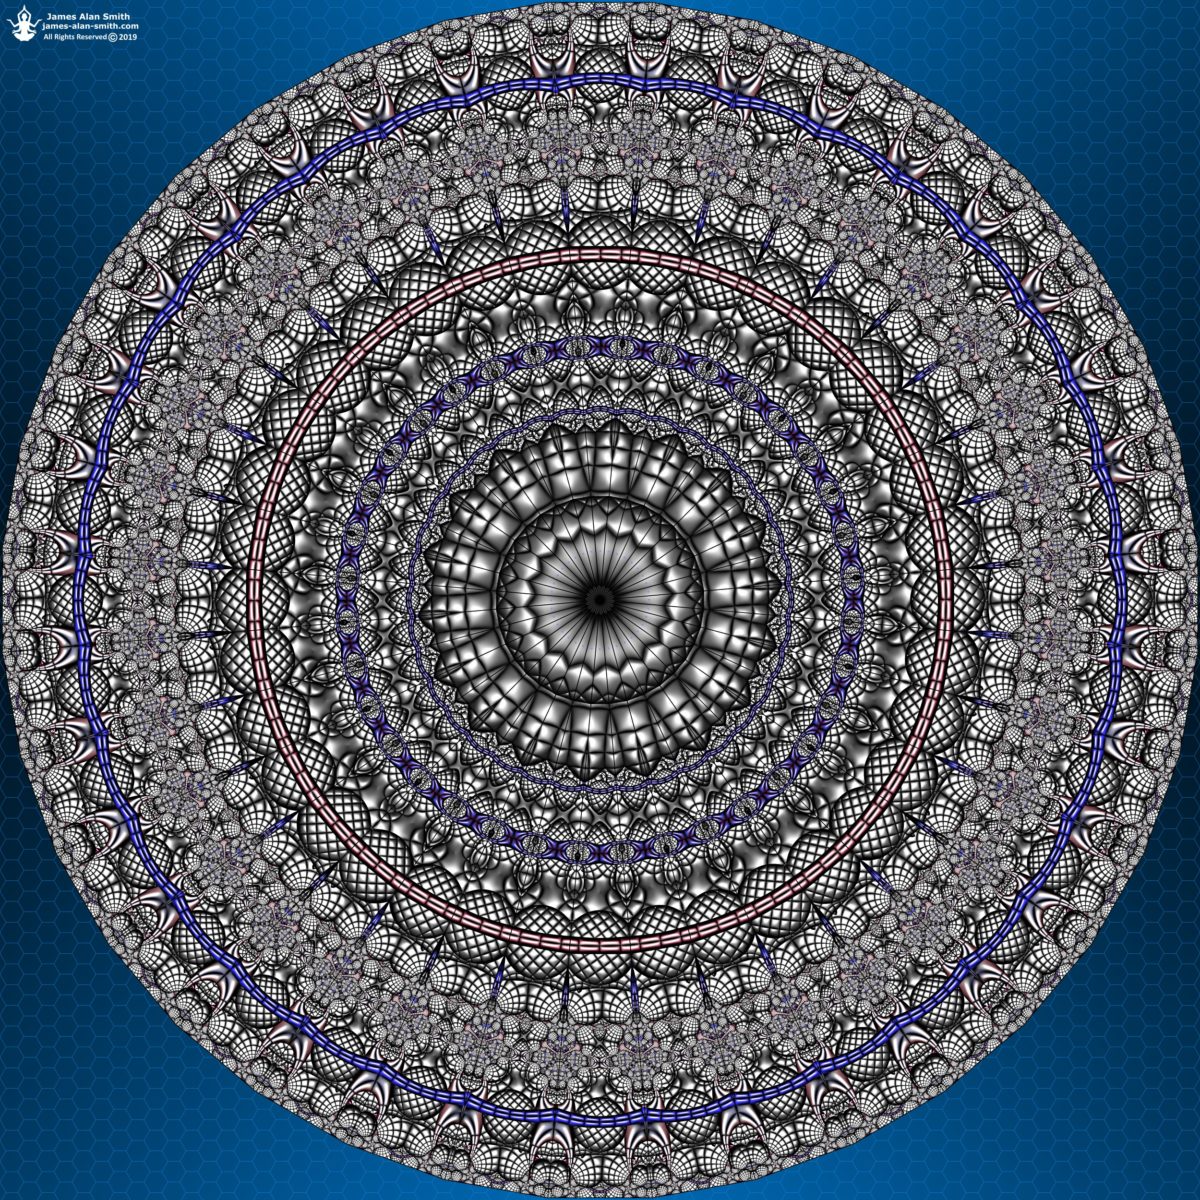 Deeper Formations Mandala: Artwork by James Alan Smith